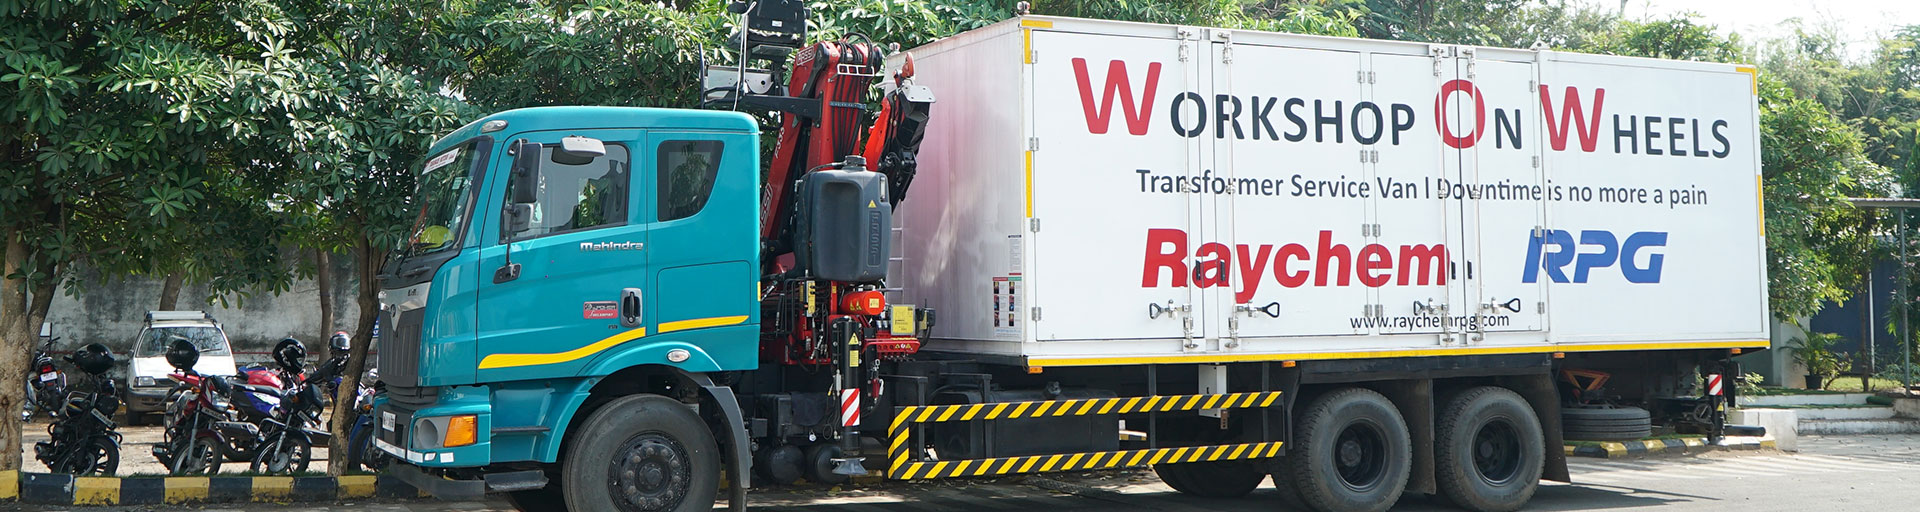 Transformer Services